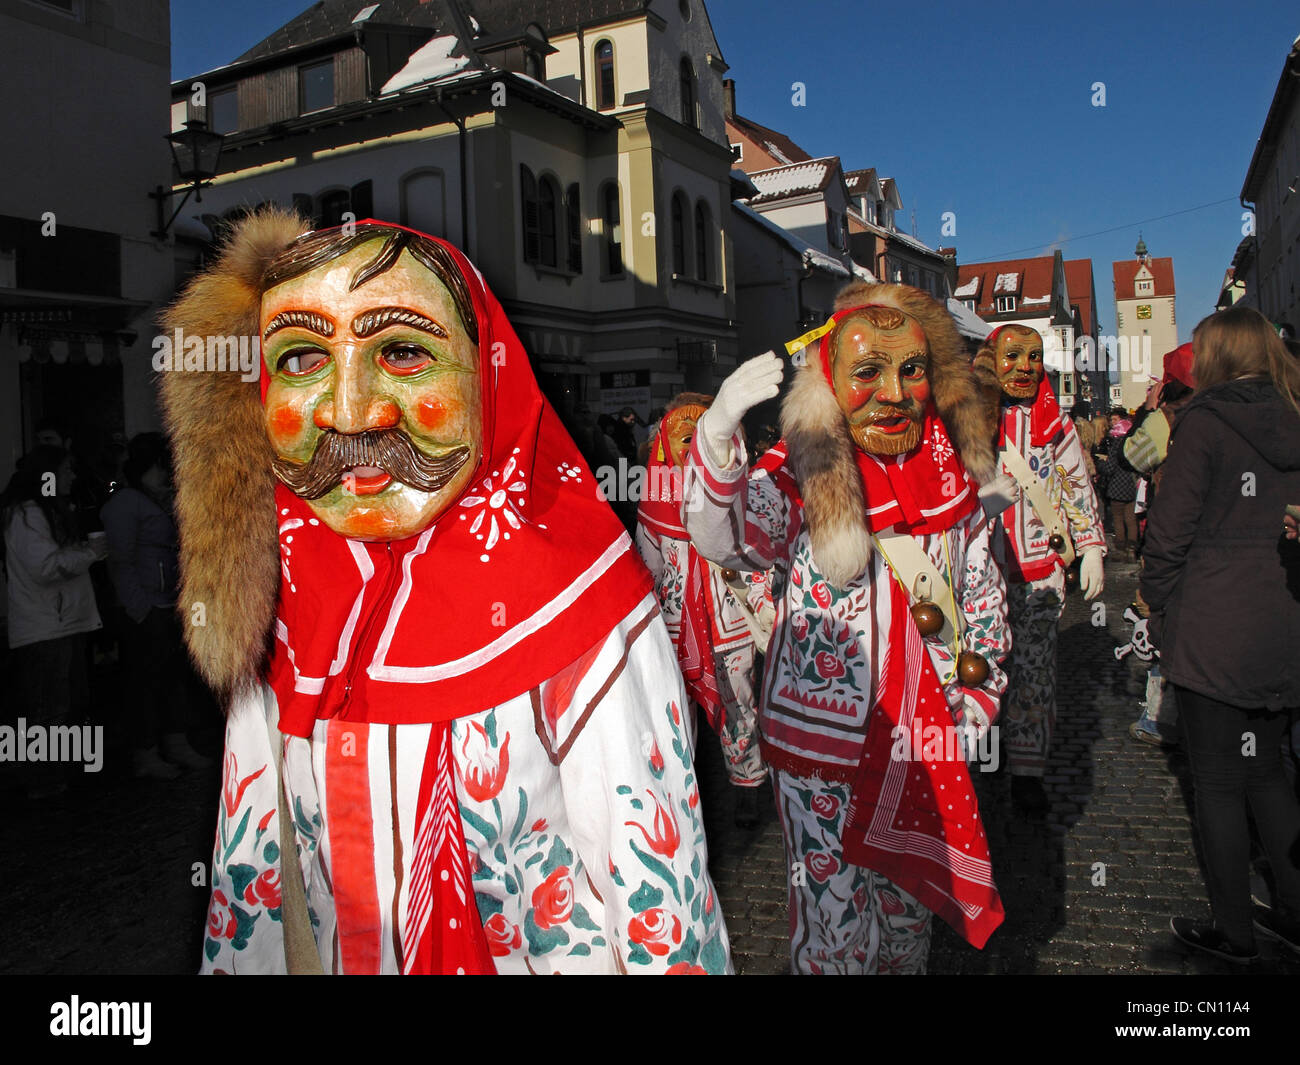 Carnival mask witch -Fotos und -Bildmaterial in hoher Auflösung – Alamy